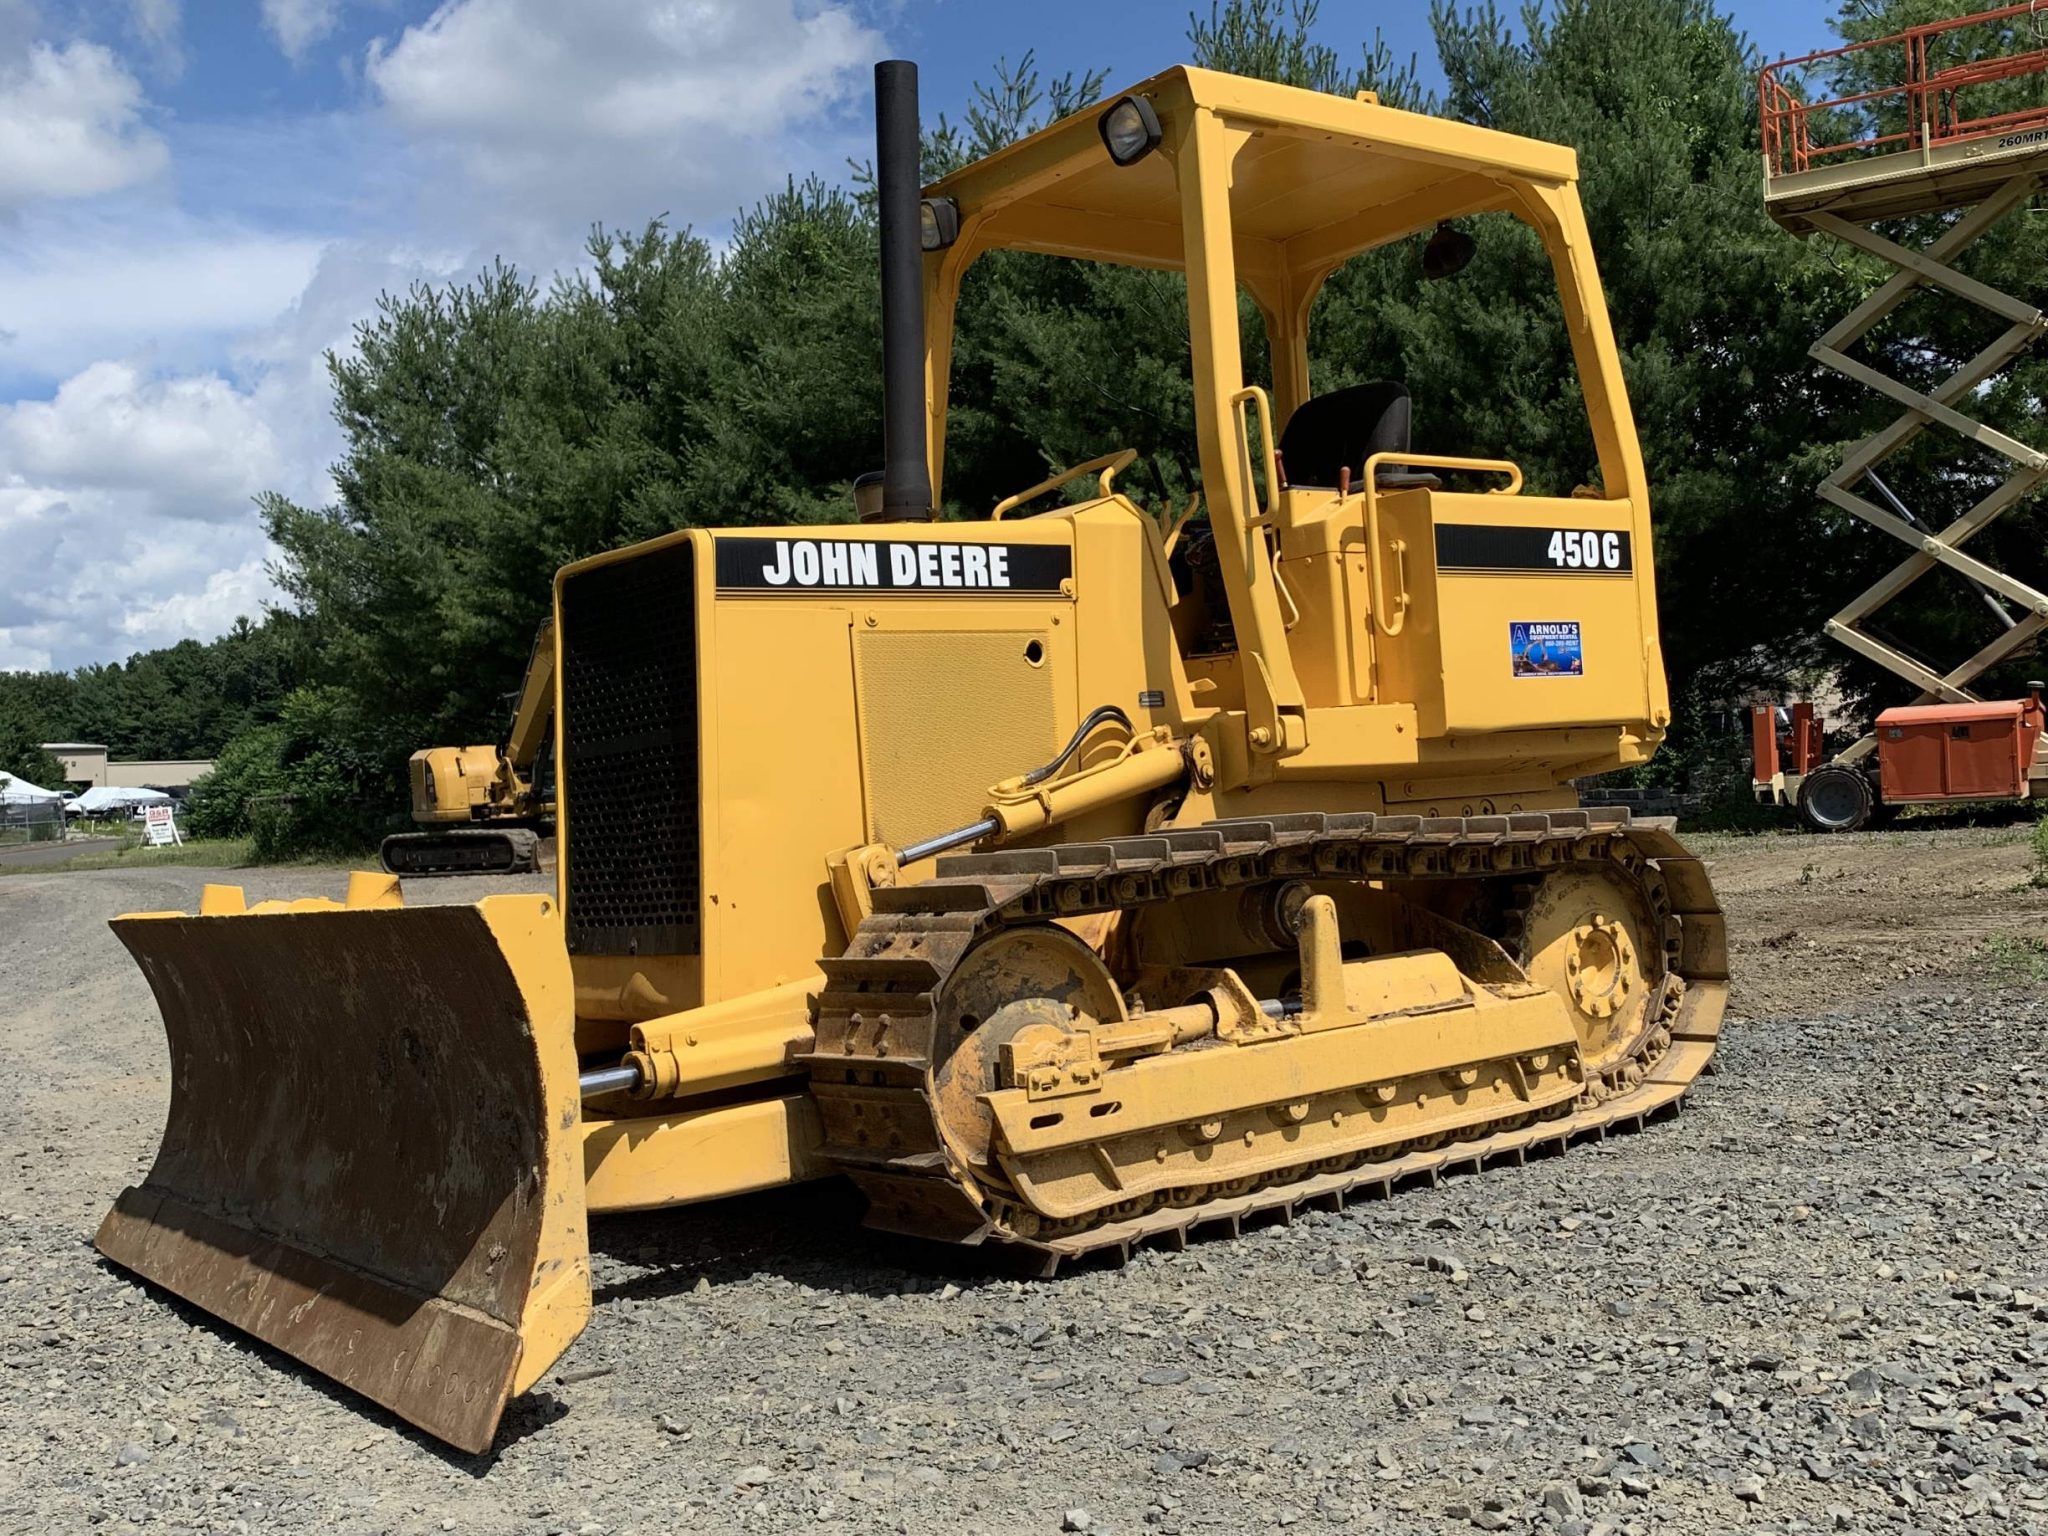 John Deere 450g Bulldozer Rental Arnolds Equipment Rentals